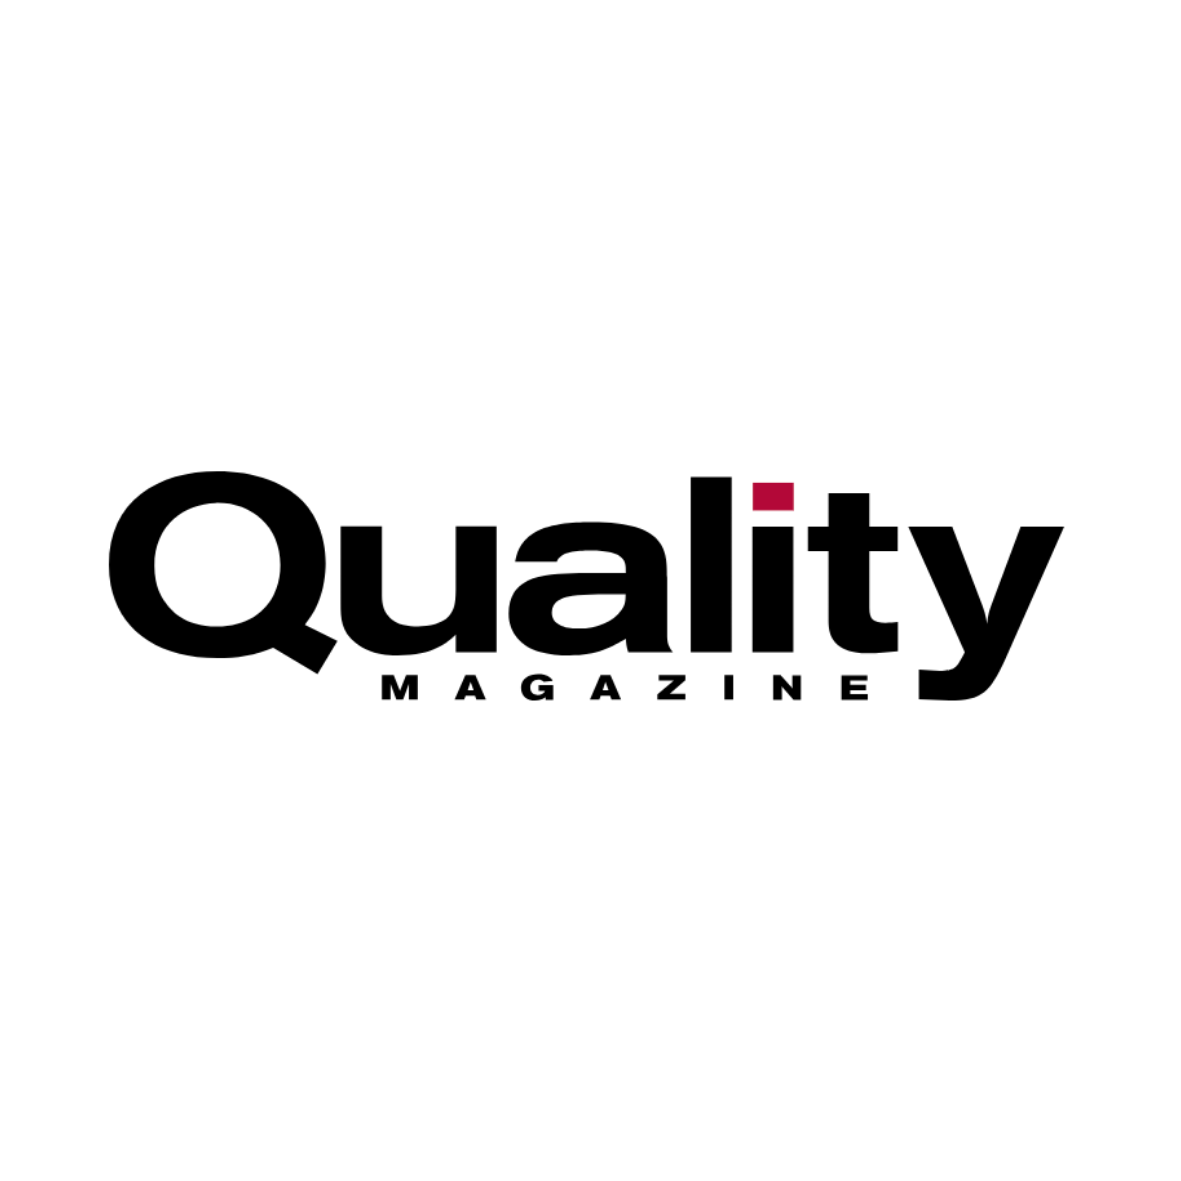 quality magazine logo